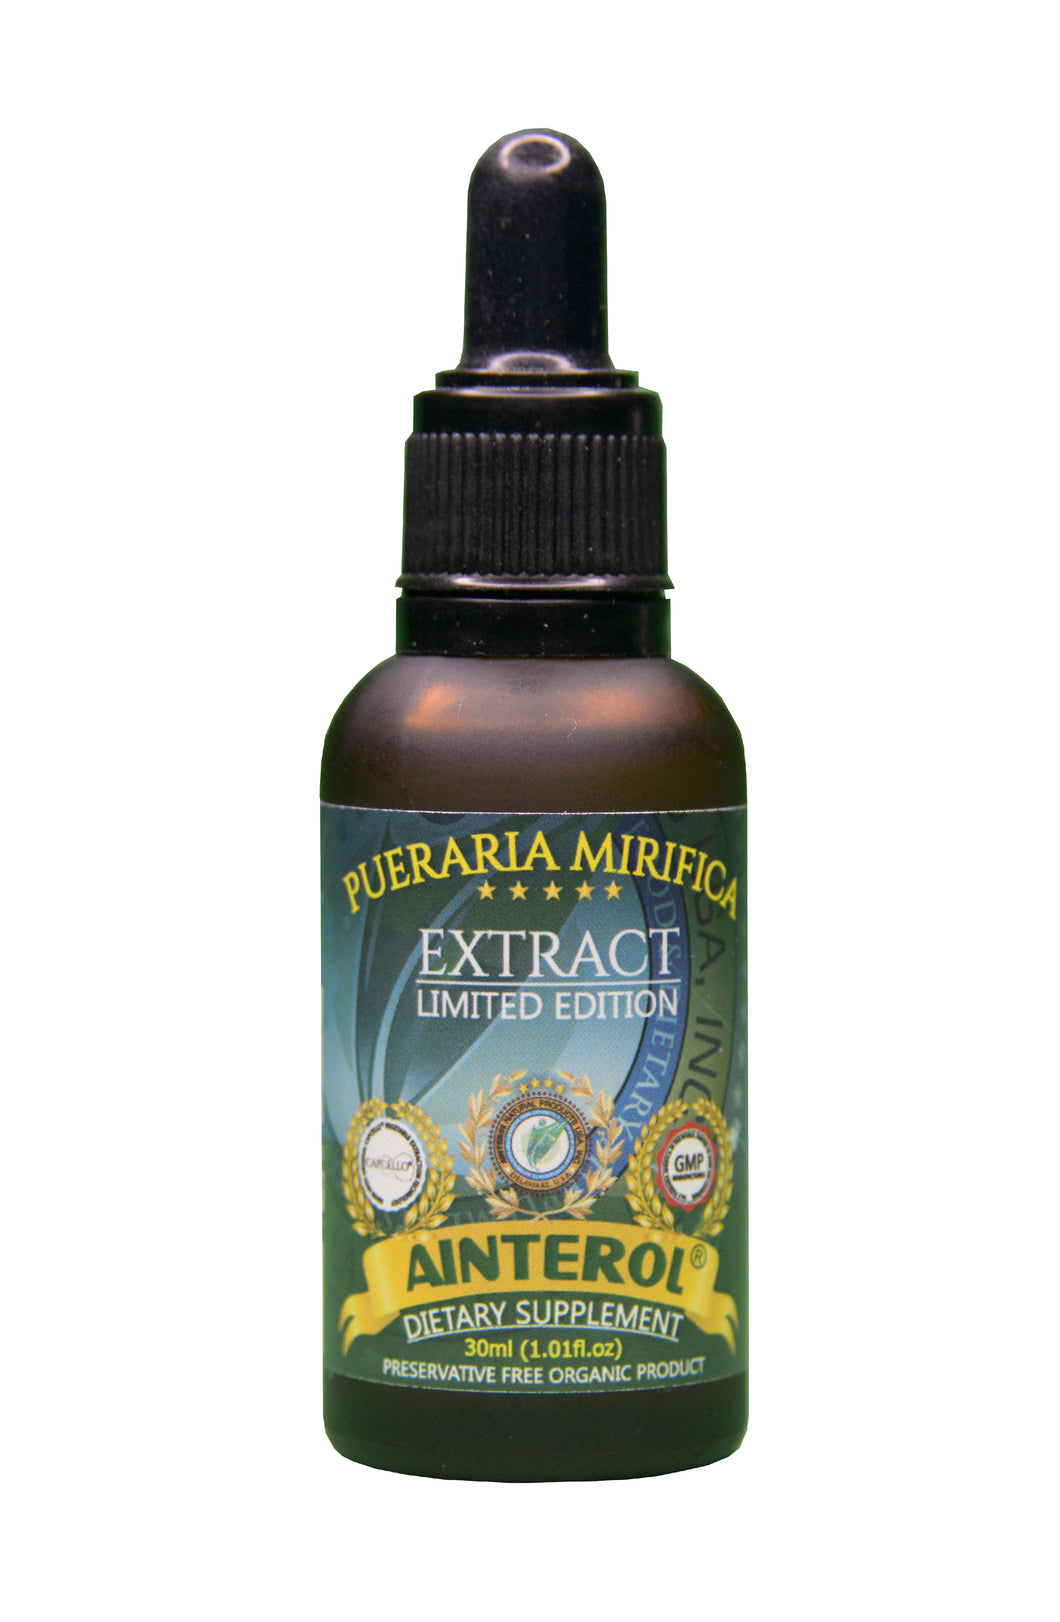 AINTEROL® Pueraria Mirifica Extract 30ml (1.01fl.oz)